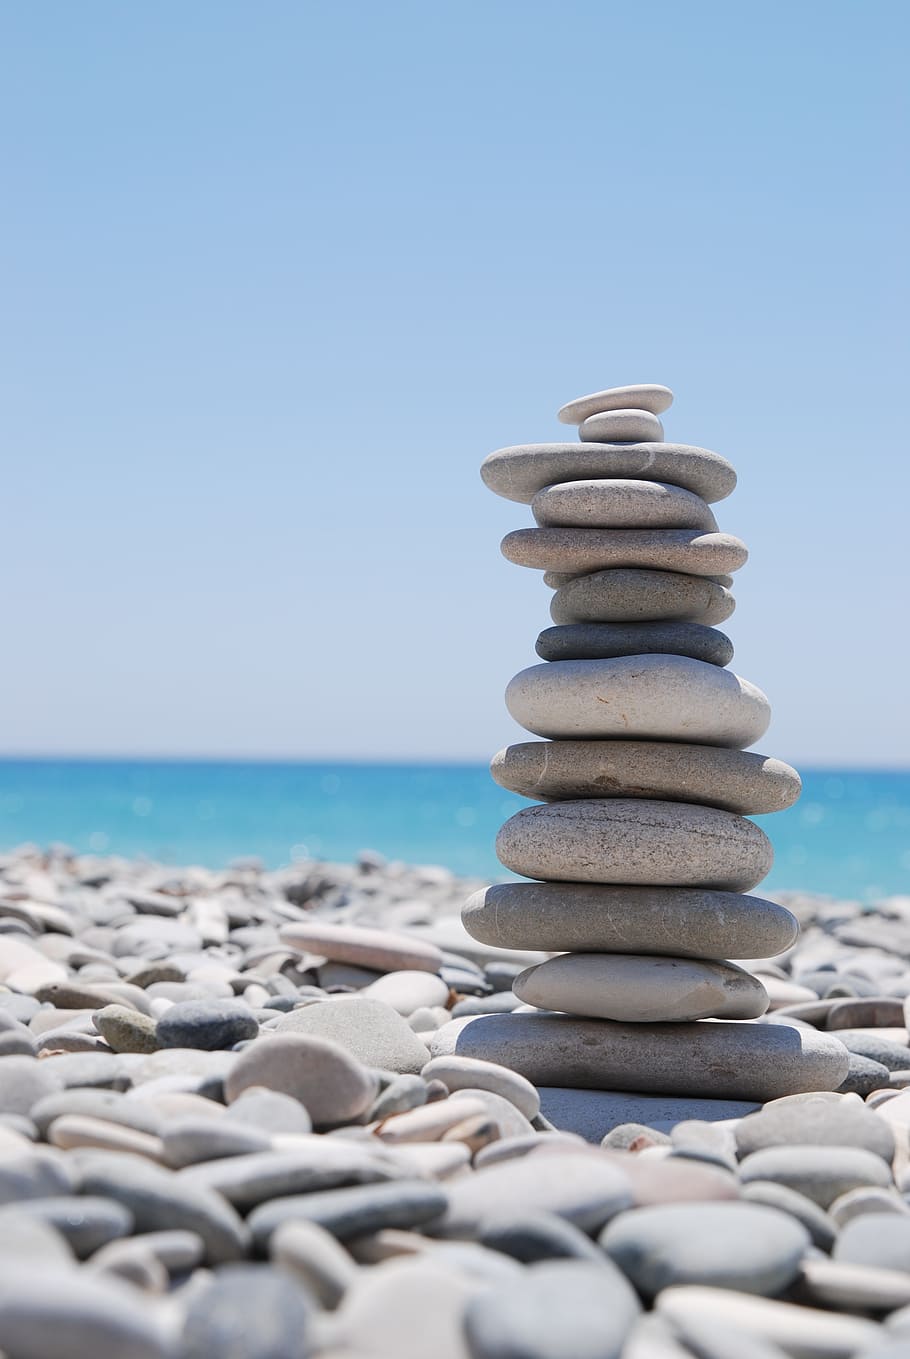 pile, stones, sea, zen, pebble, balance, stack, zen-like, stone - Object, stability